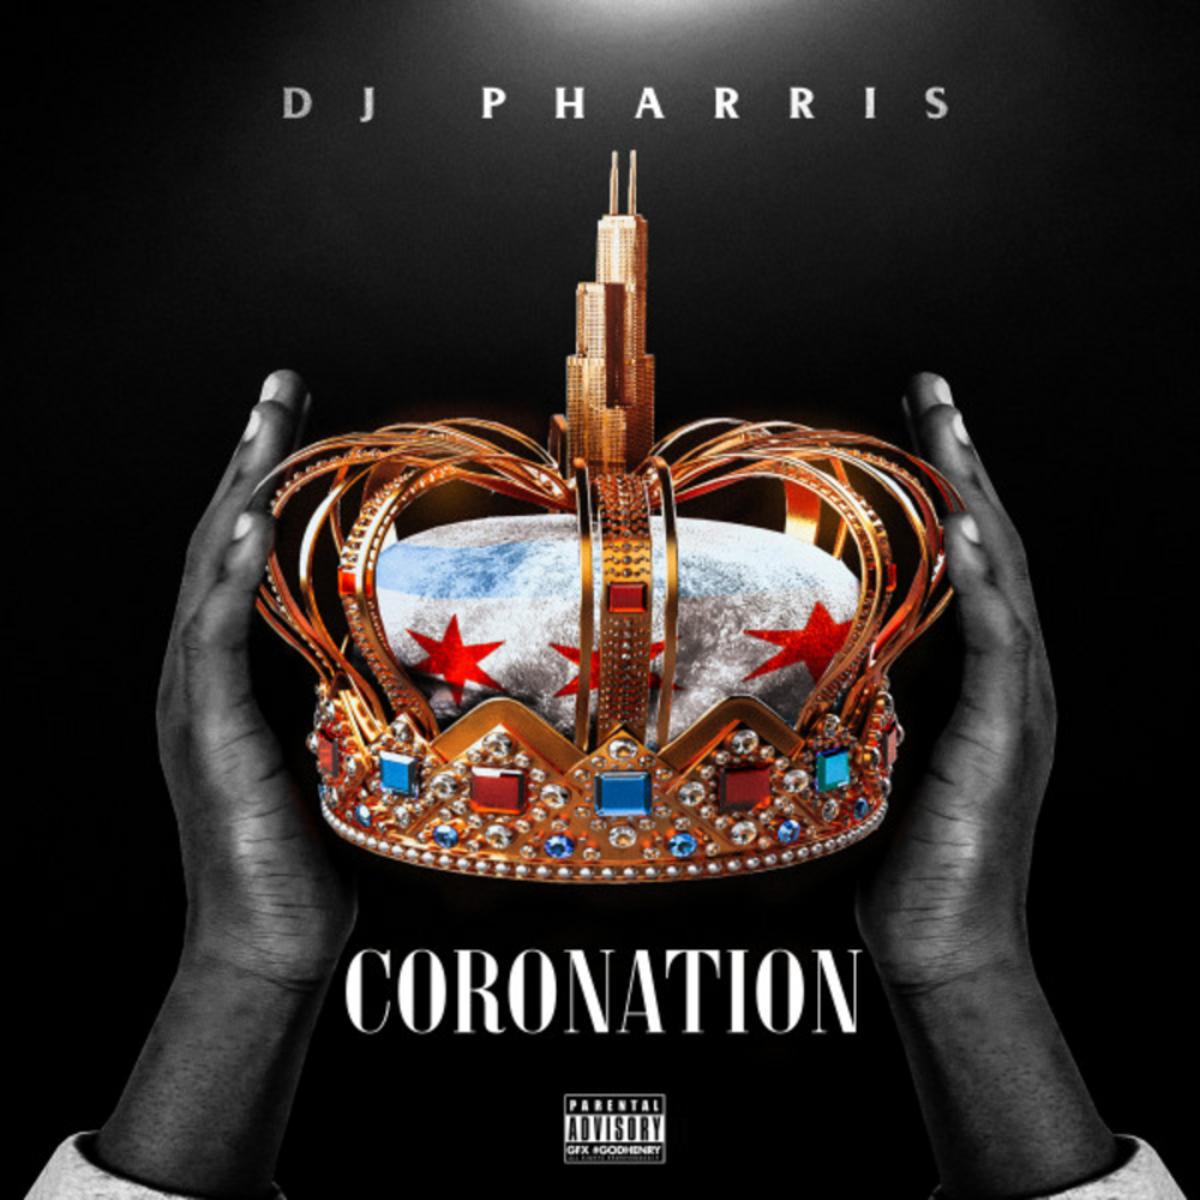 Listen To “Coronation” By DJ Pharris